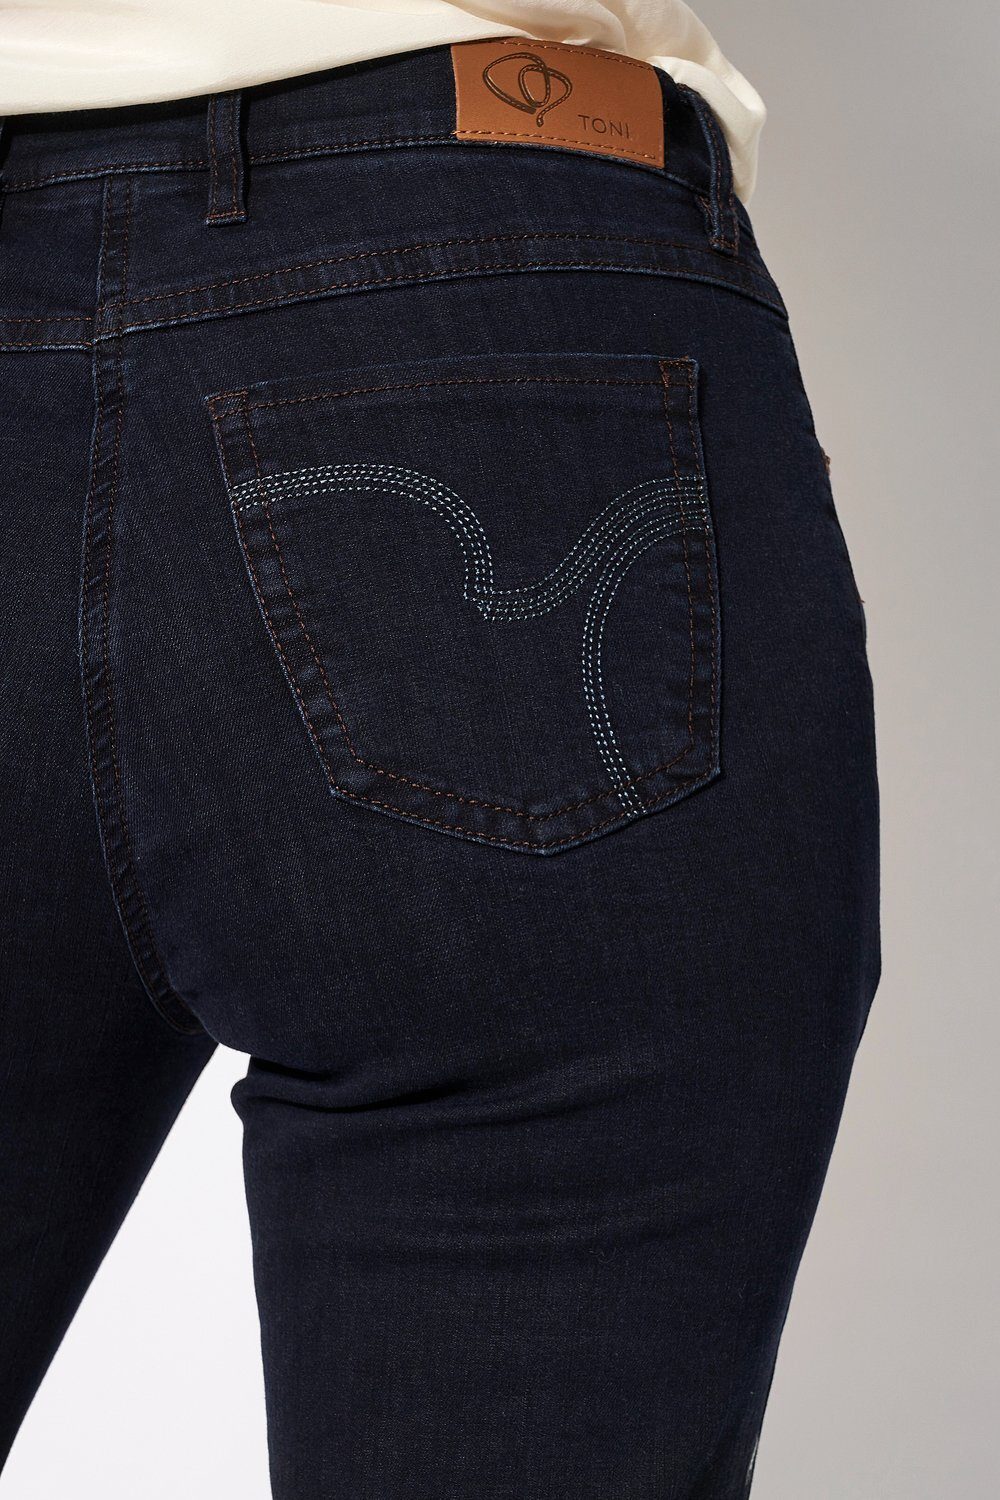 TONI 5-Pocket-Jeans Perfect dunkelblau mit an - und Shaping-Effekt Po Shape 059 Bauch